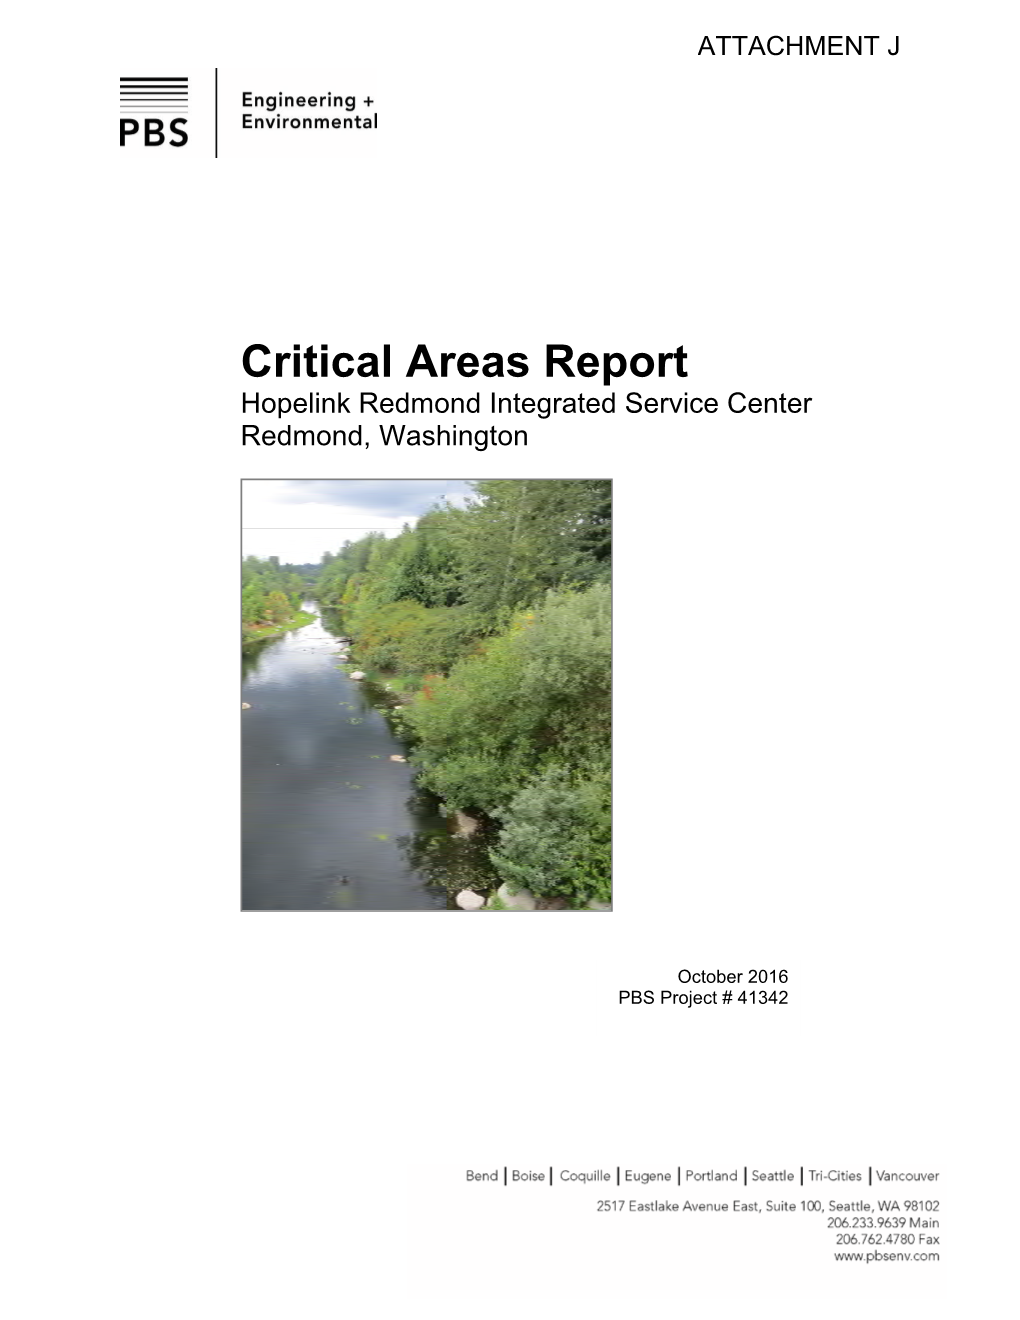 Critical Areas Report Hopelink Redmond Integrated Service Center Redmond, Washington